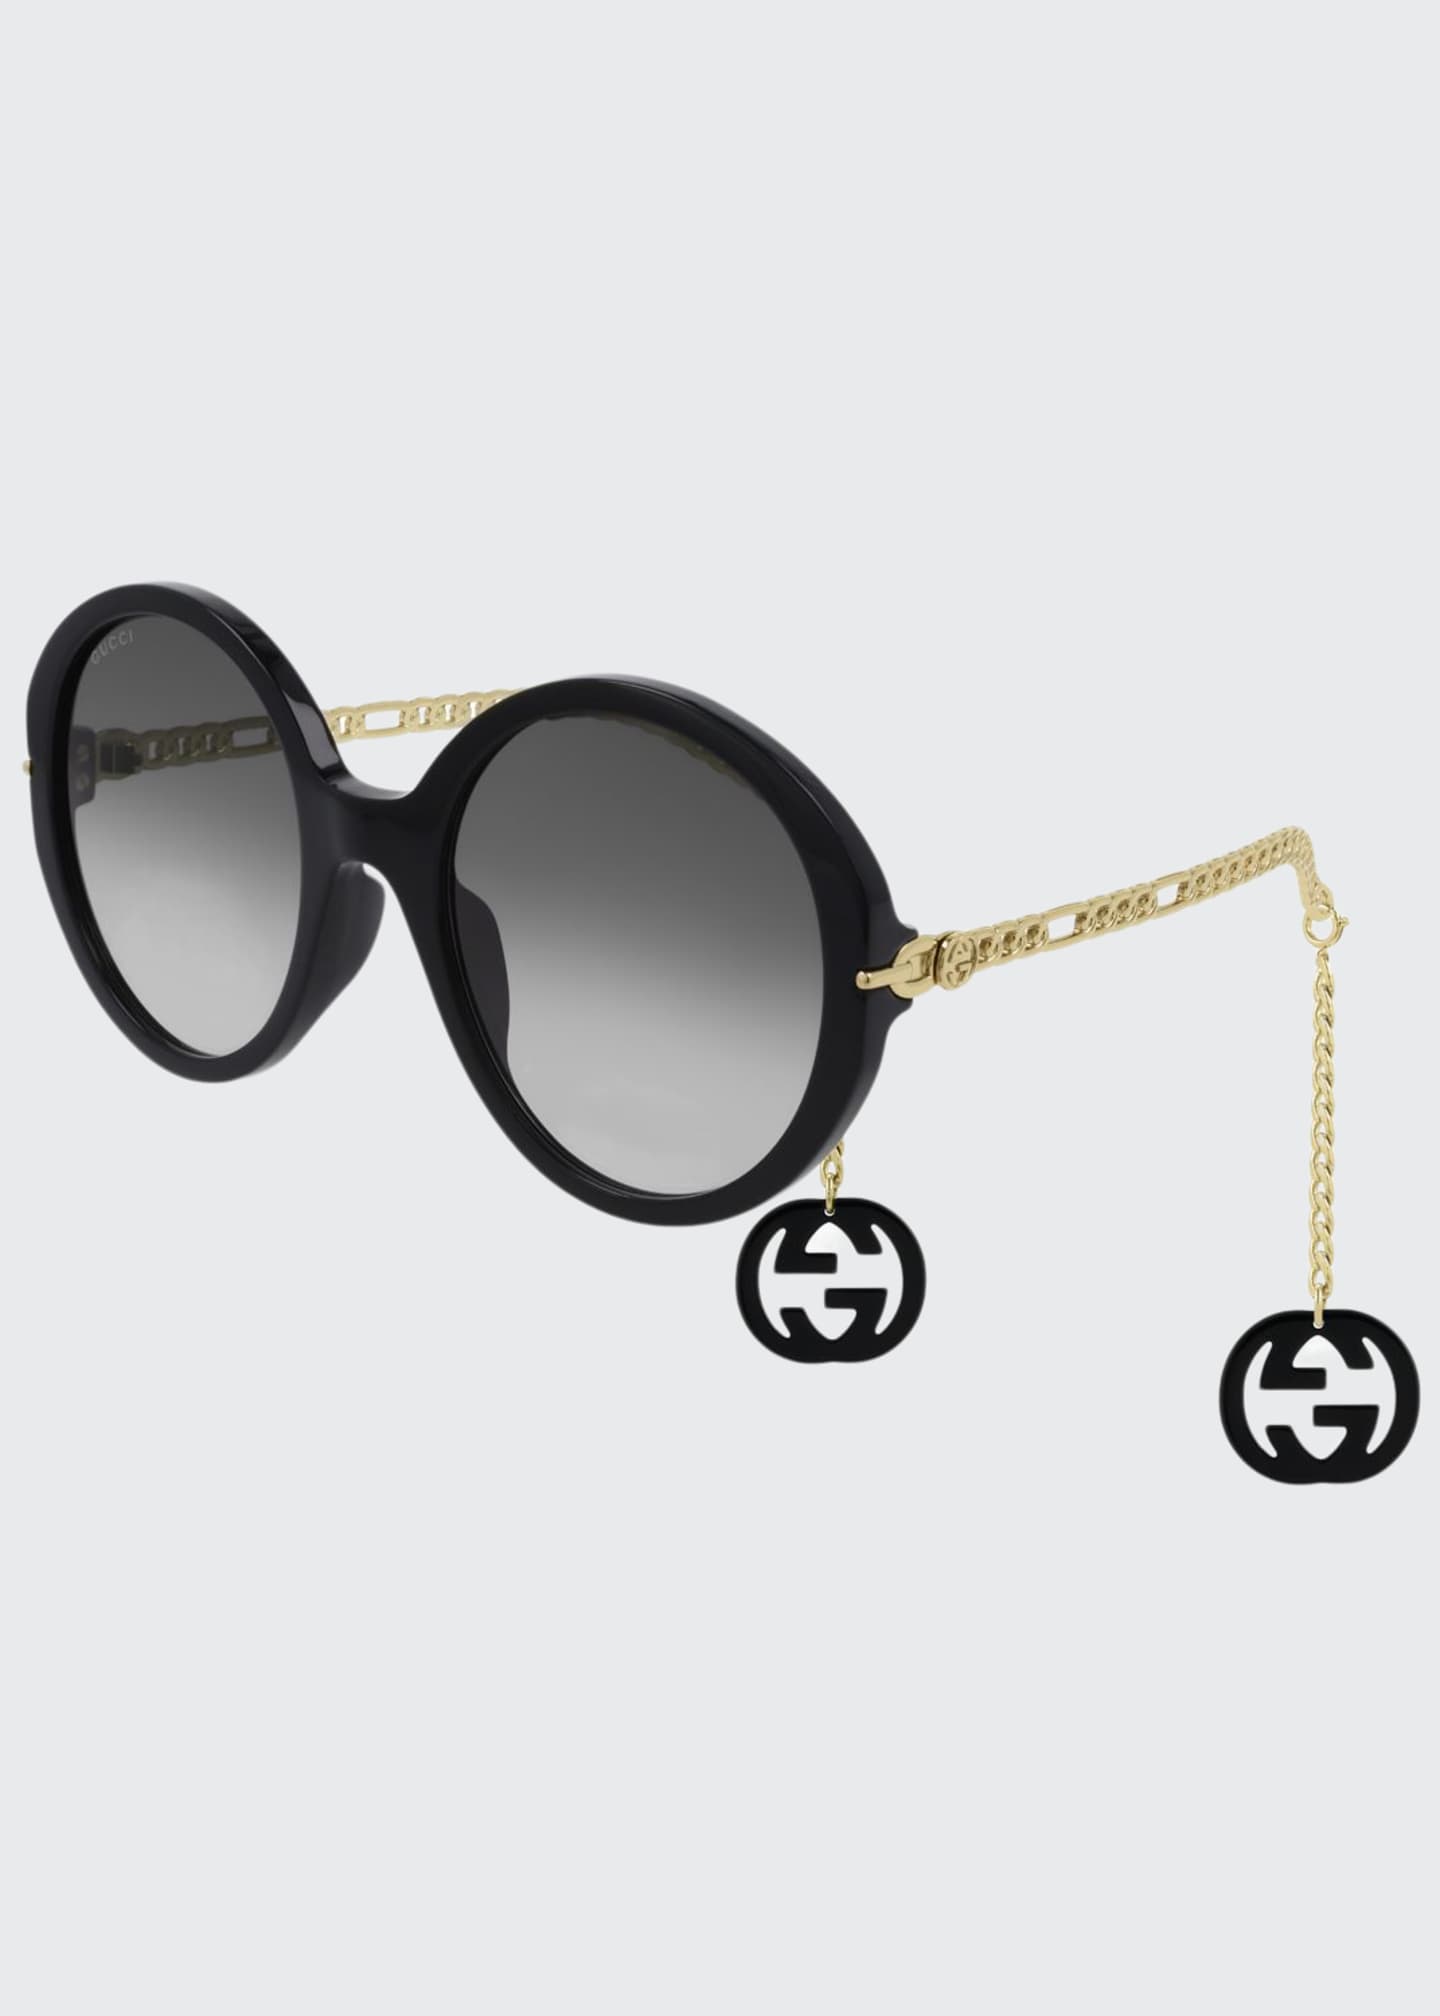 Gucci Round Acetate Sunglasses w/ Chain Arms Bergdorf Goodman